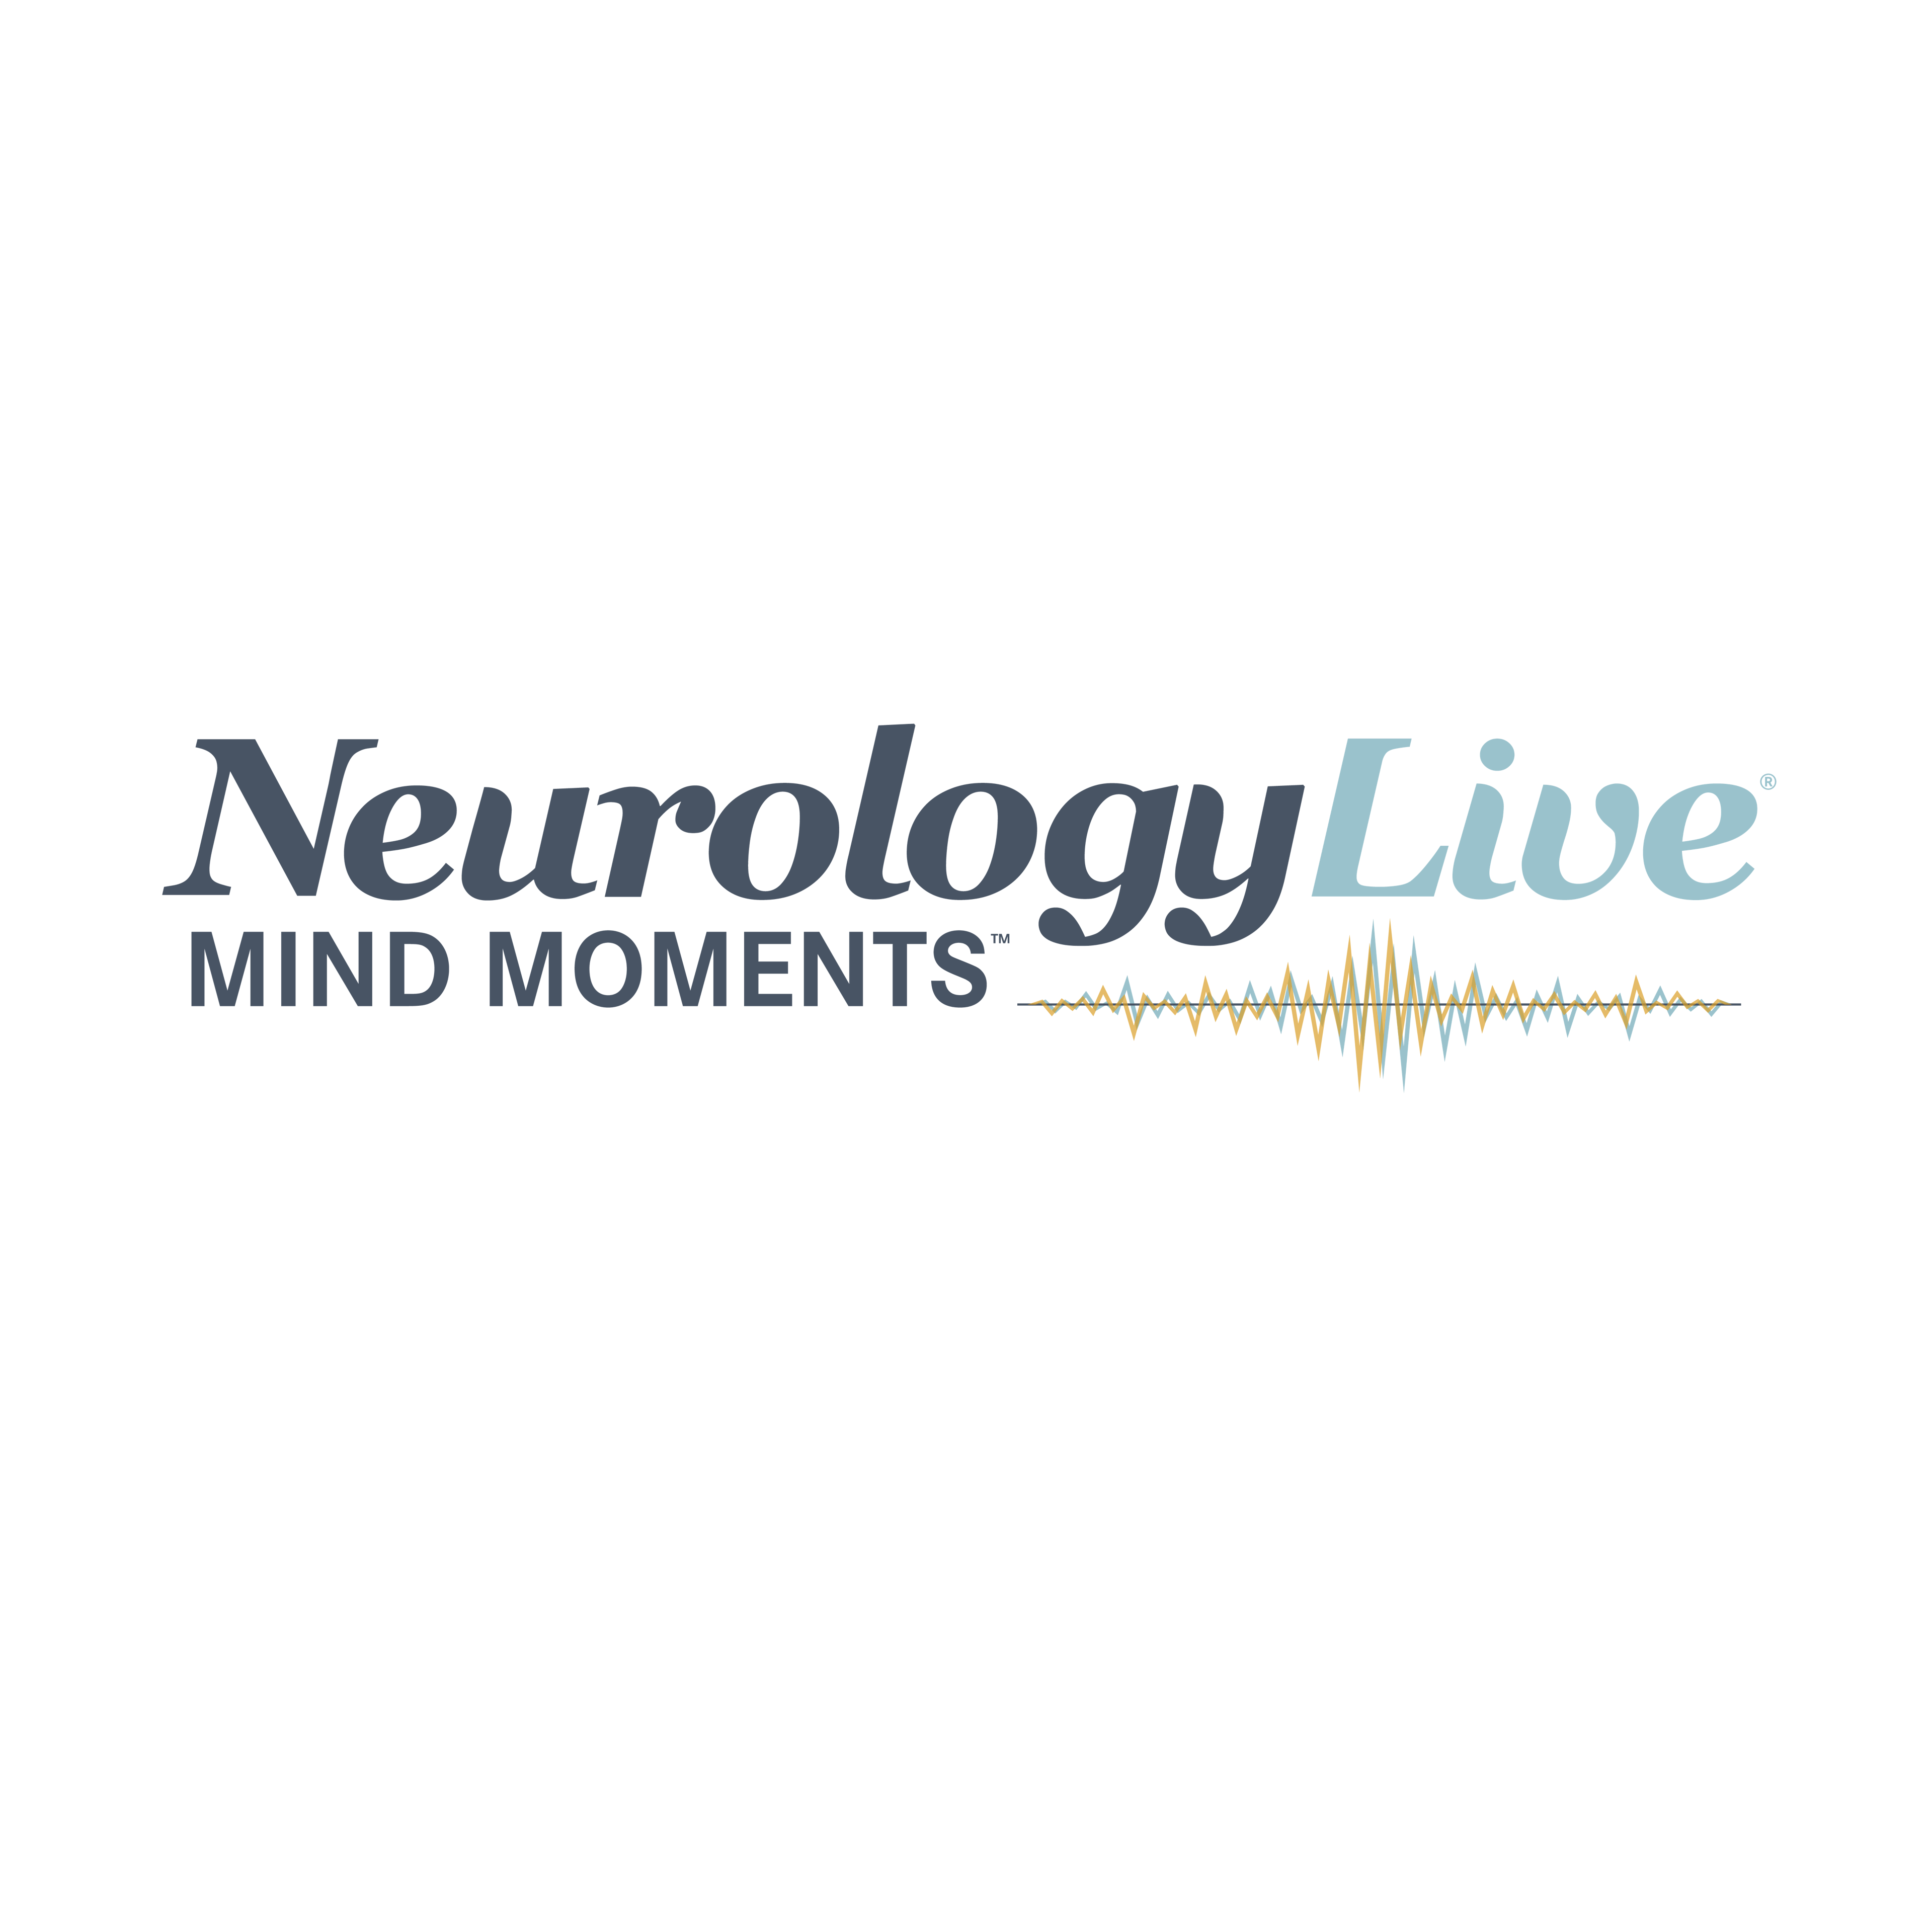 Episode 89: Potential of CNM-Au8 Gold Nanocrystals to Treat ALS